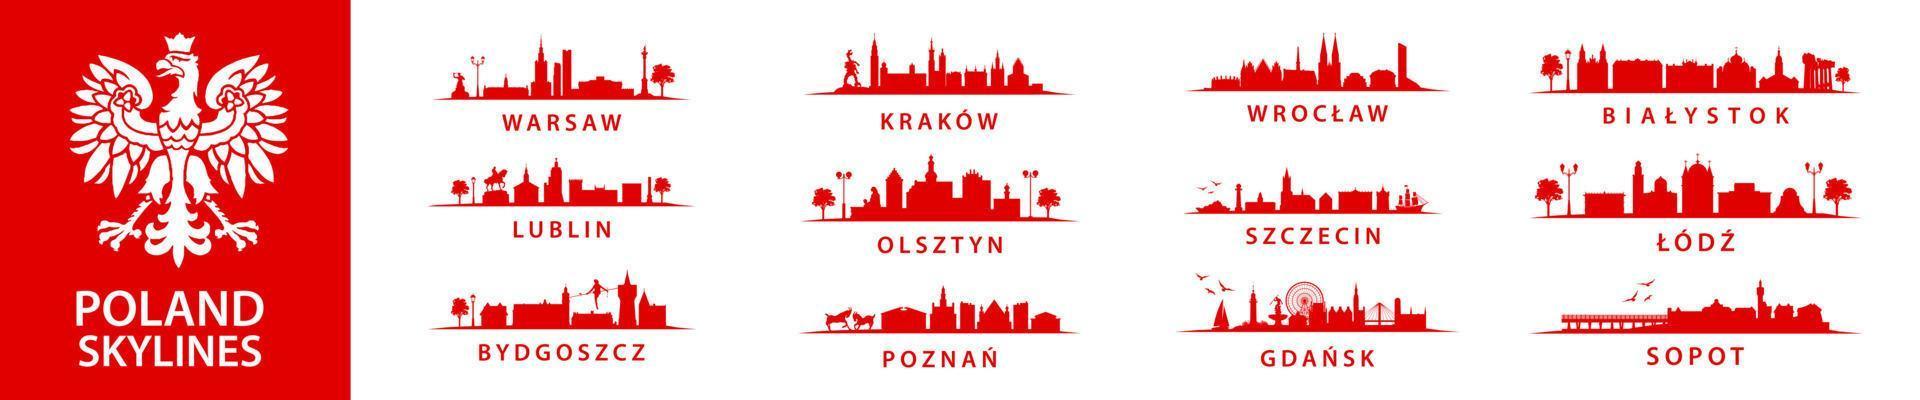 colección de horizontes polacos, gran conjunto de ciudades en polonia, europa del este, szczecin, cracovia, wroclaw, lublin, olsztyn, varsovia, bydgoszcz, poznan, gdansk, lodz, sopot, bialystok vector